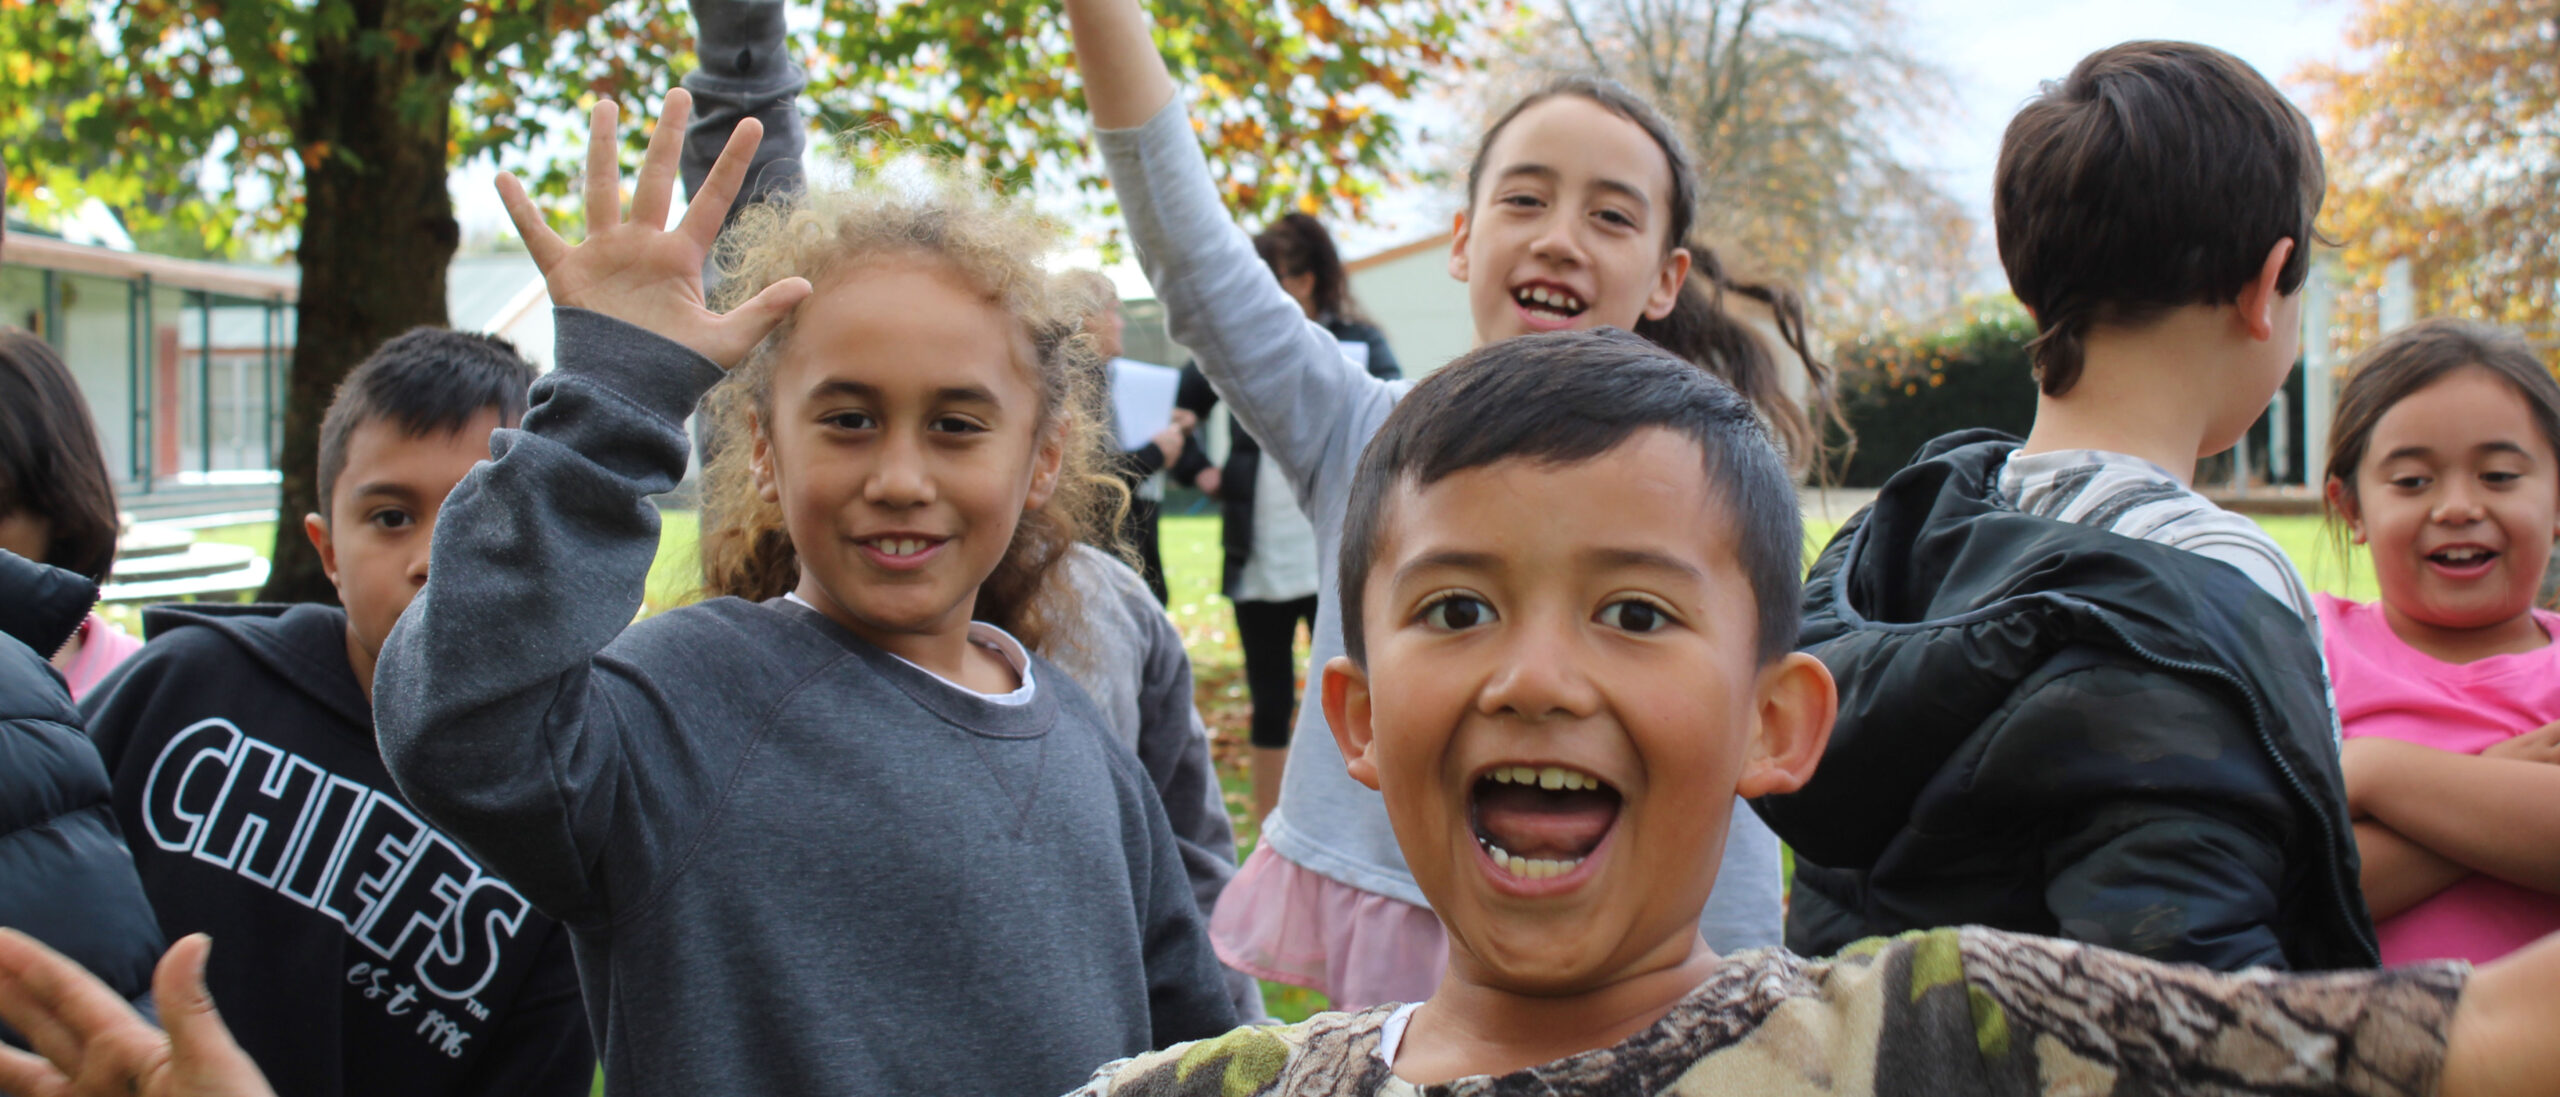 Kiwi Can Kids smiling at camera